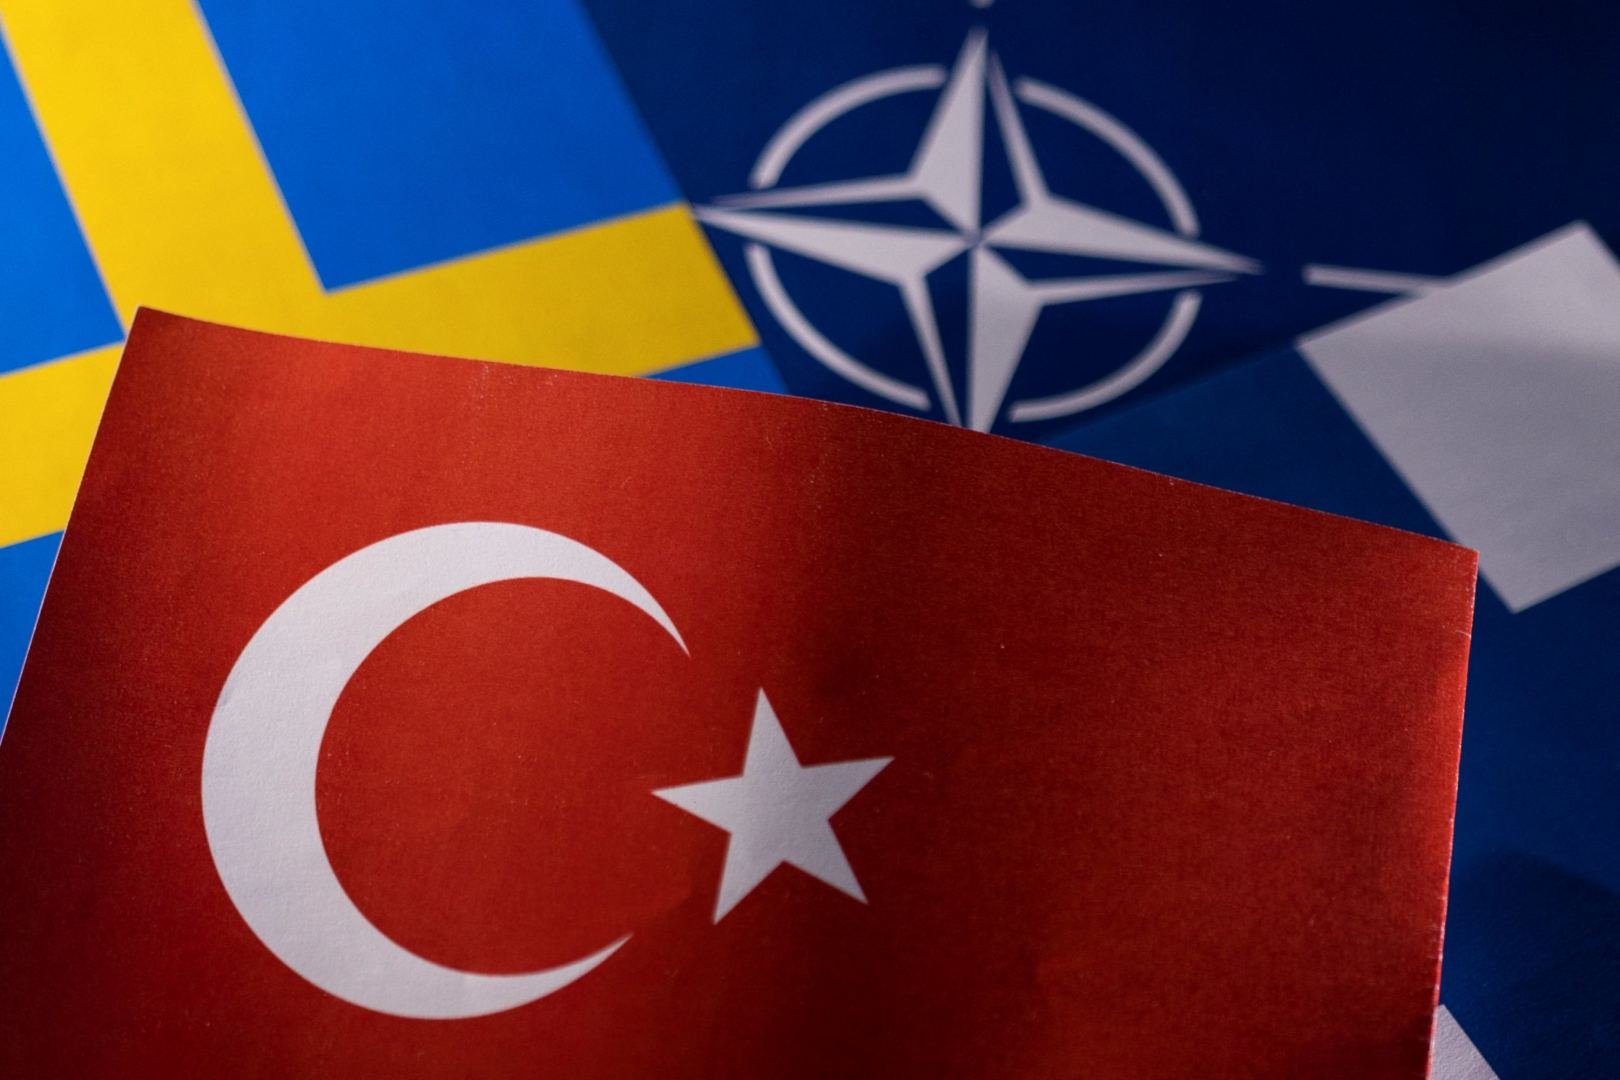 Sweden's defense minister to visit Türkiye amid NATO tensions